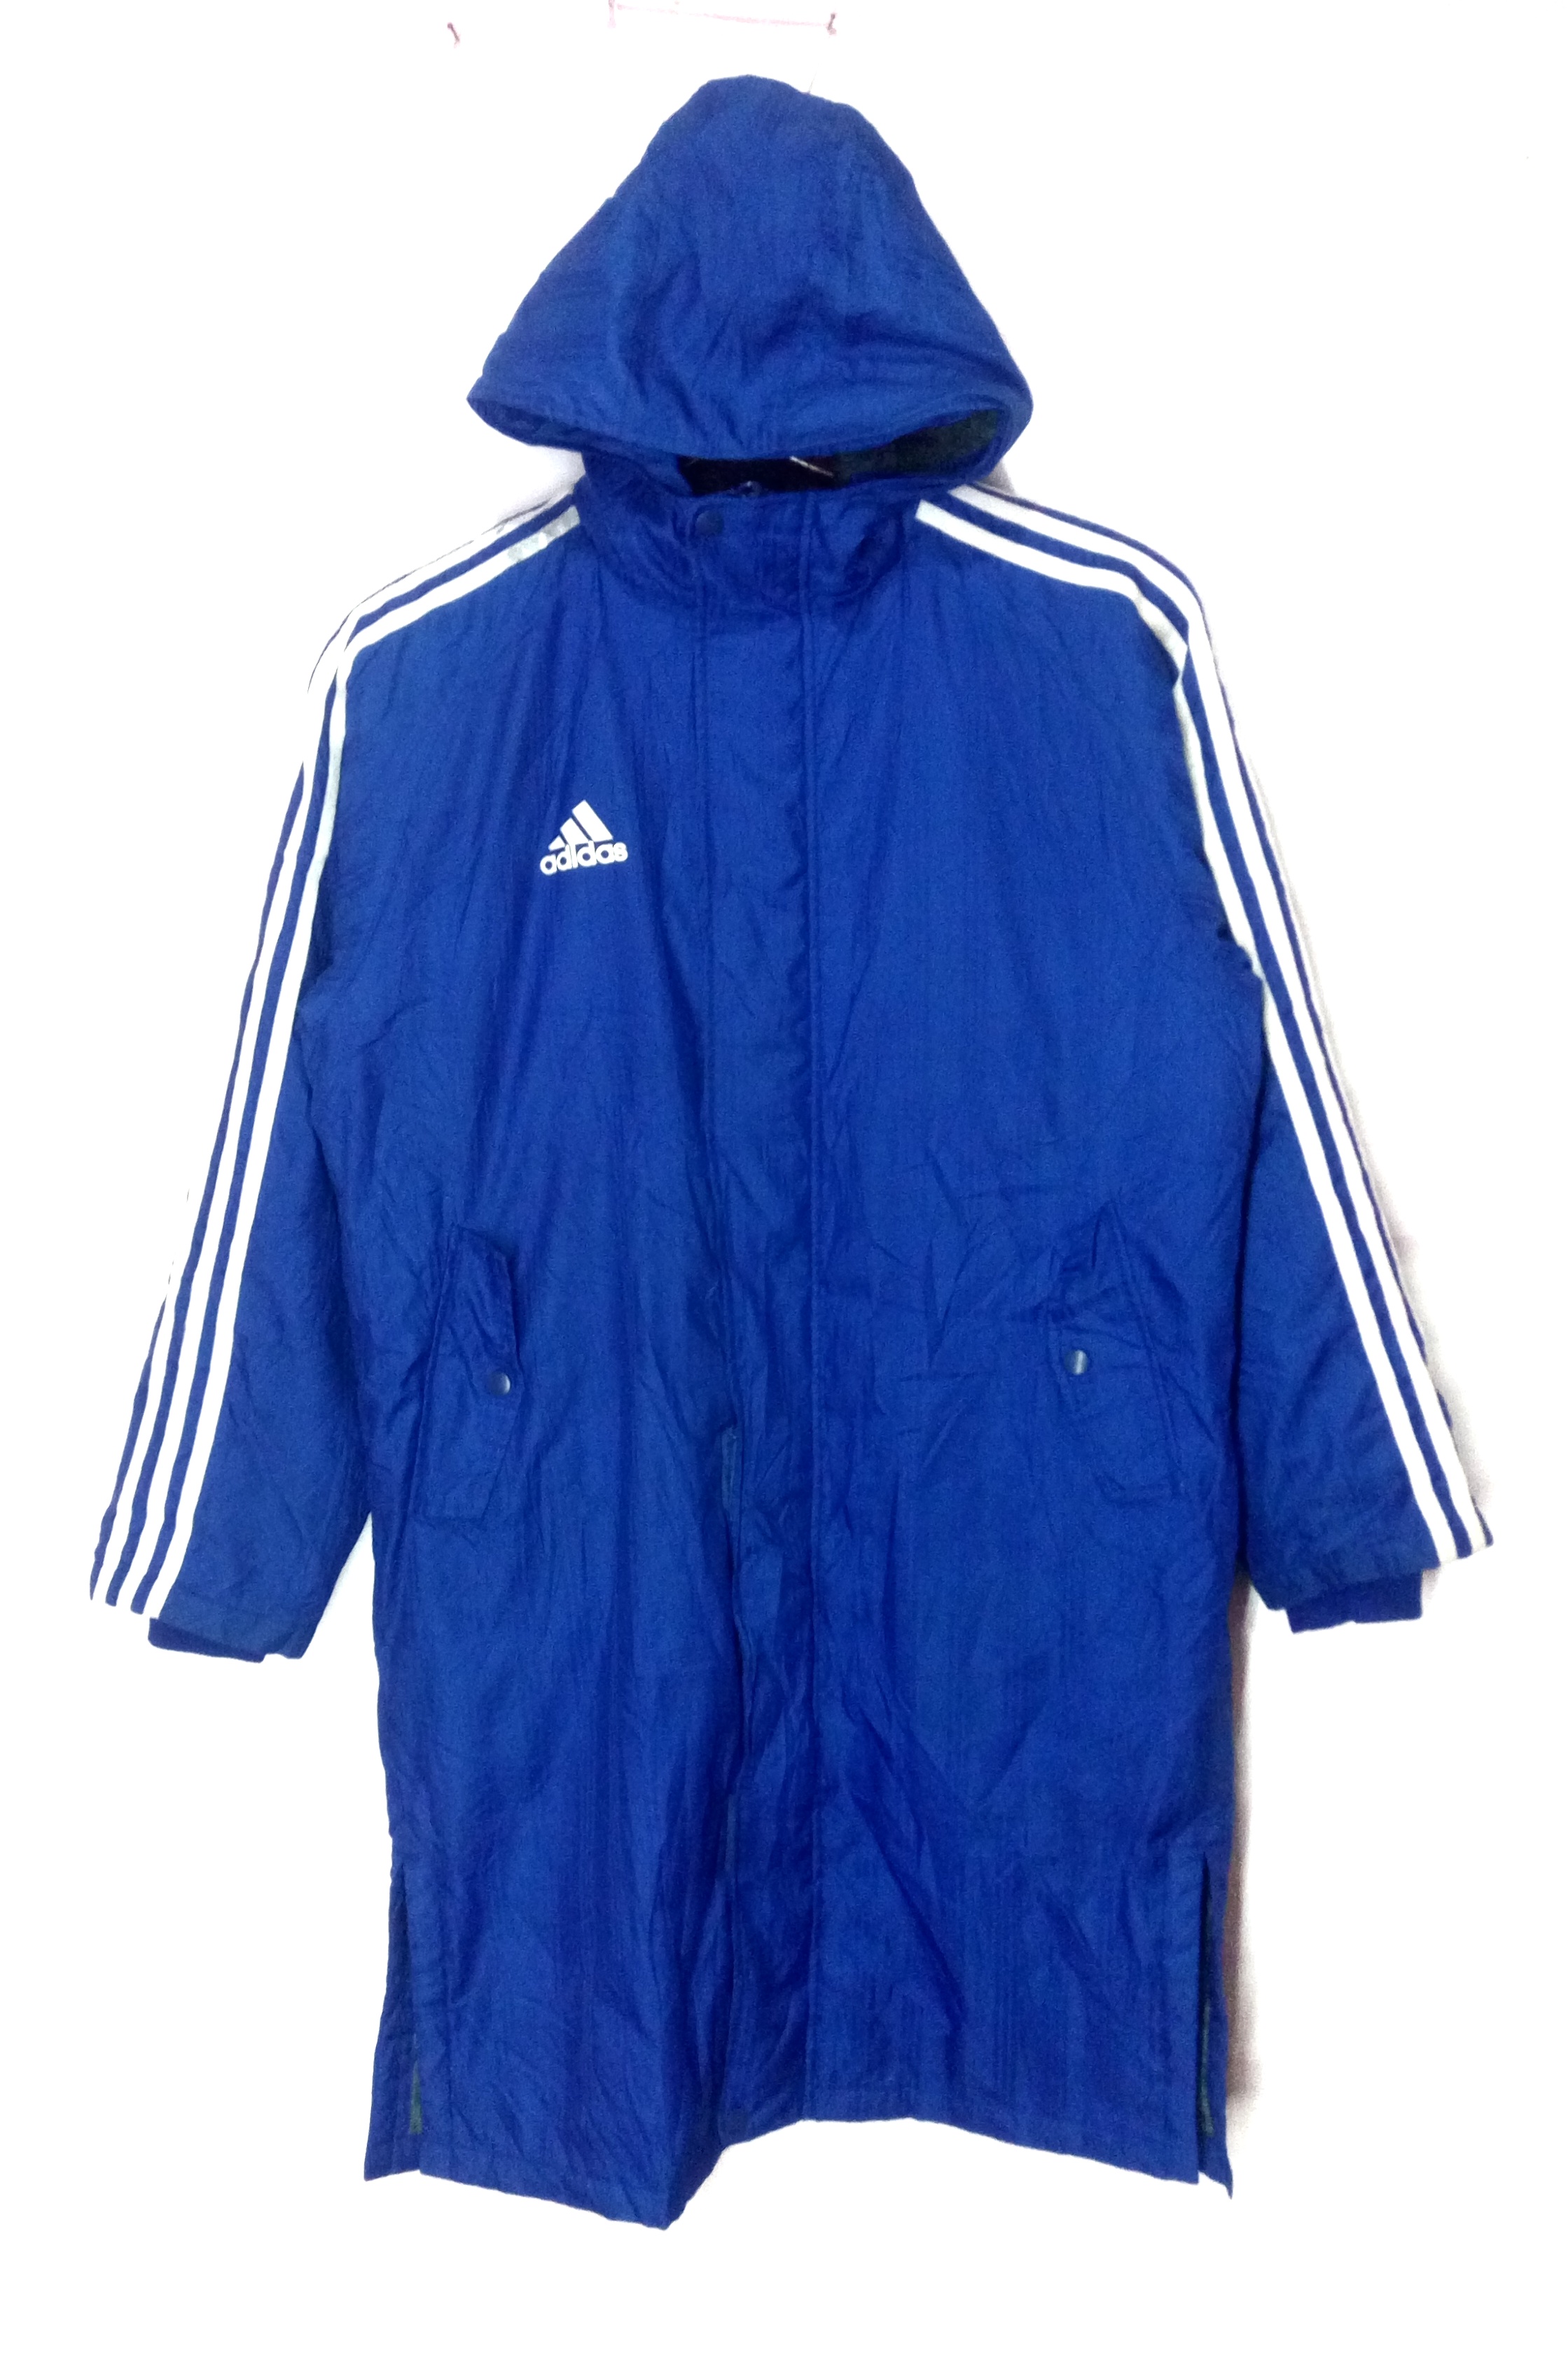 Adidas big logo sherpa inner lining long jacket hoodie parka winter size M/L - 1